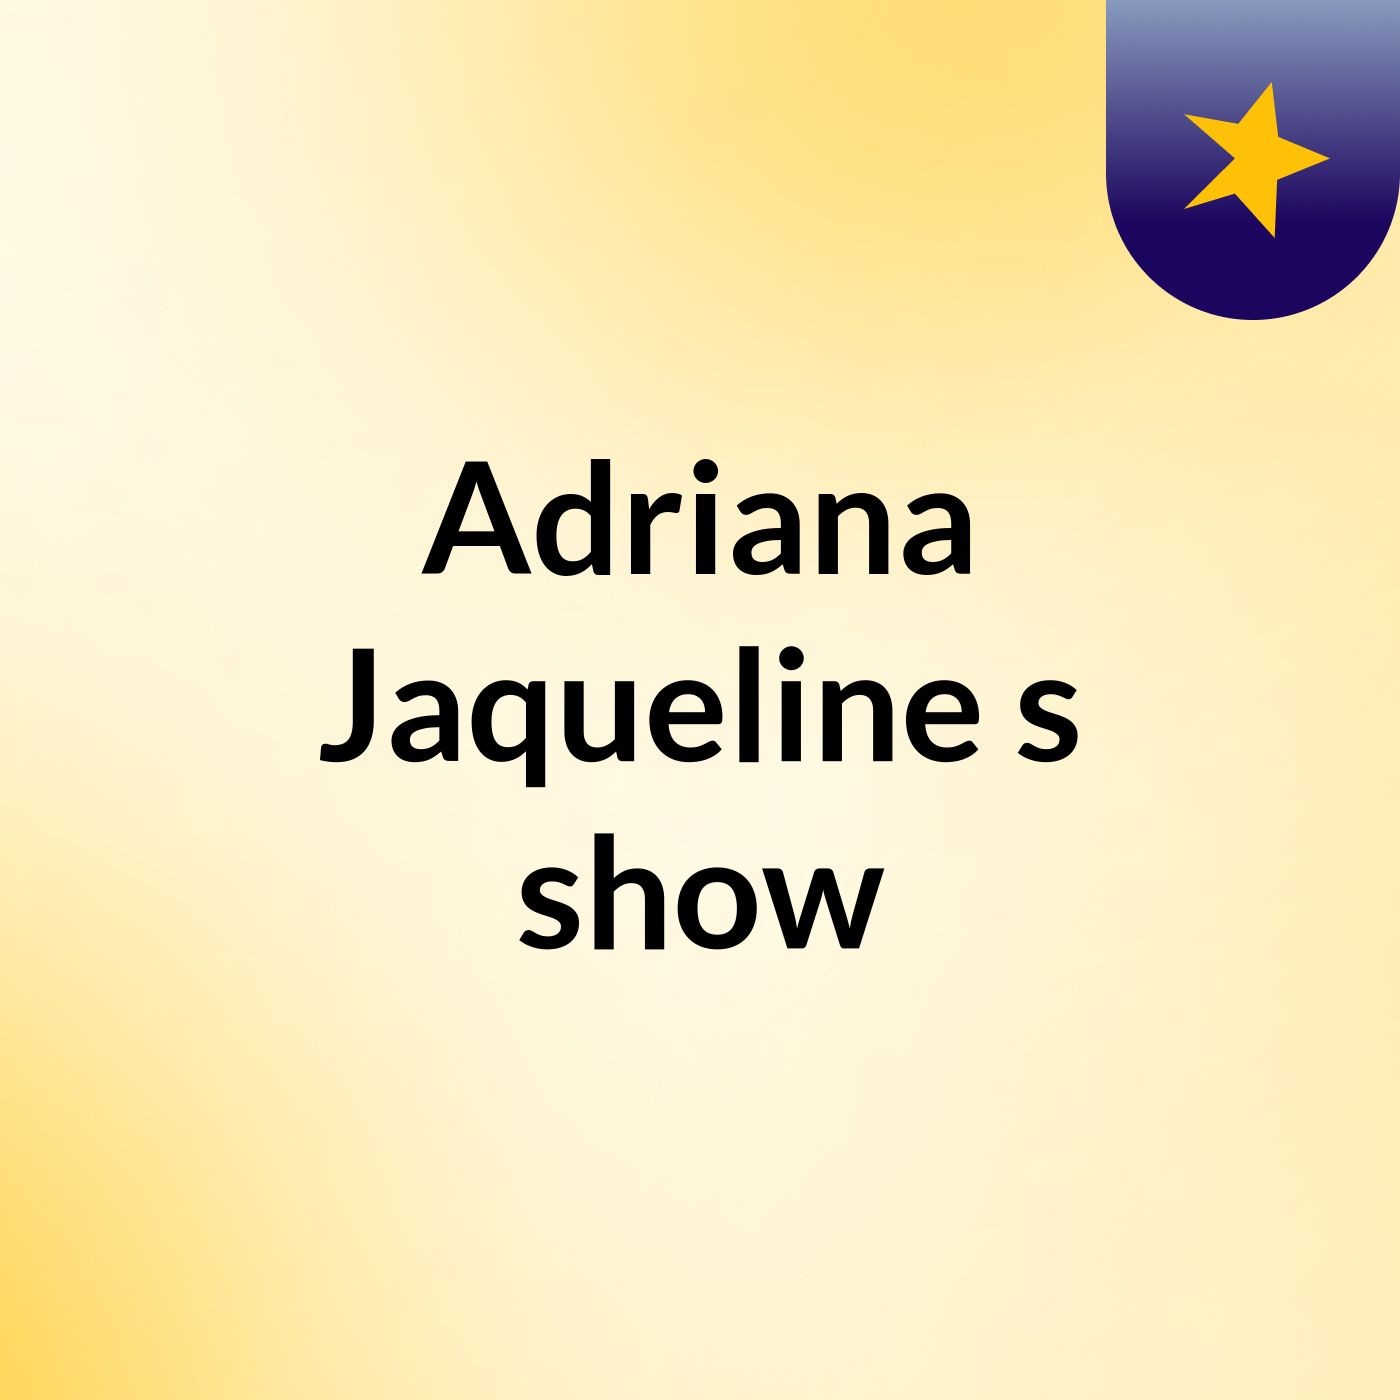 Adriana Jaqueline's show